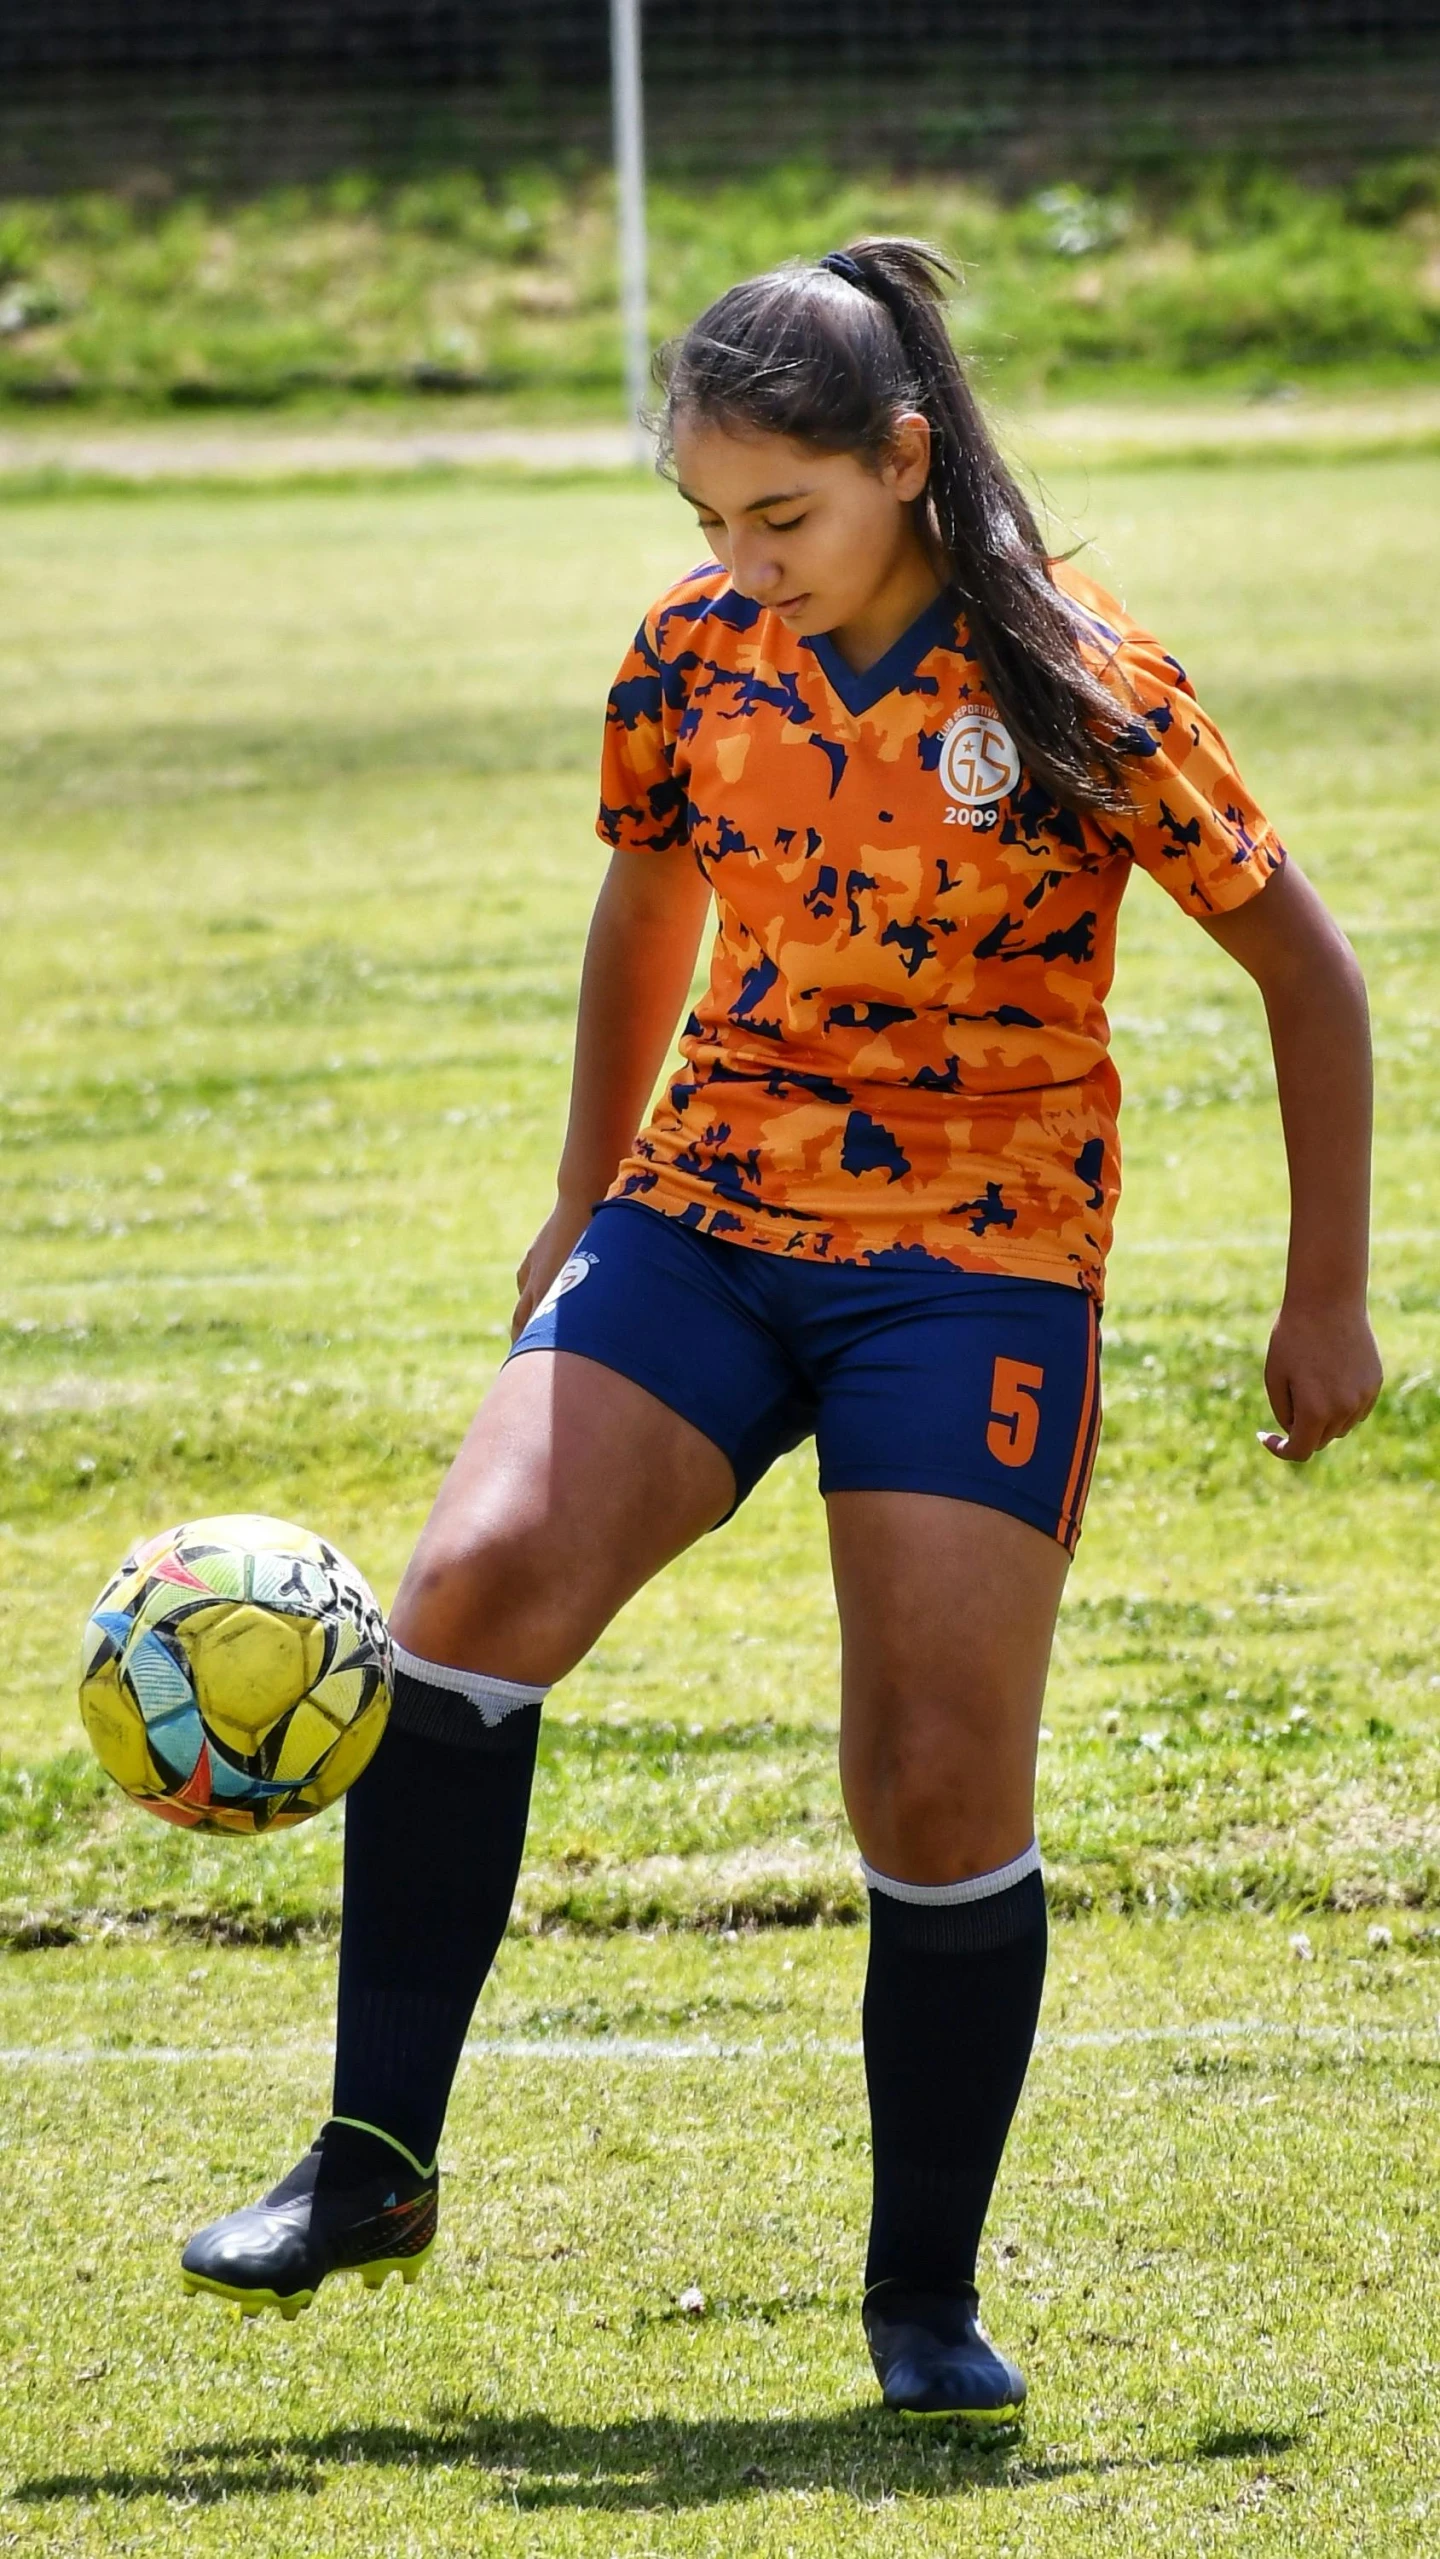  in an orange shirt kicking a soccer ball